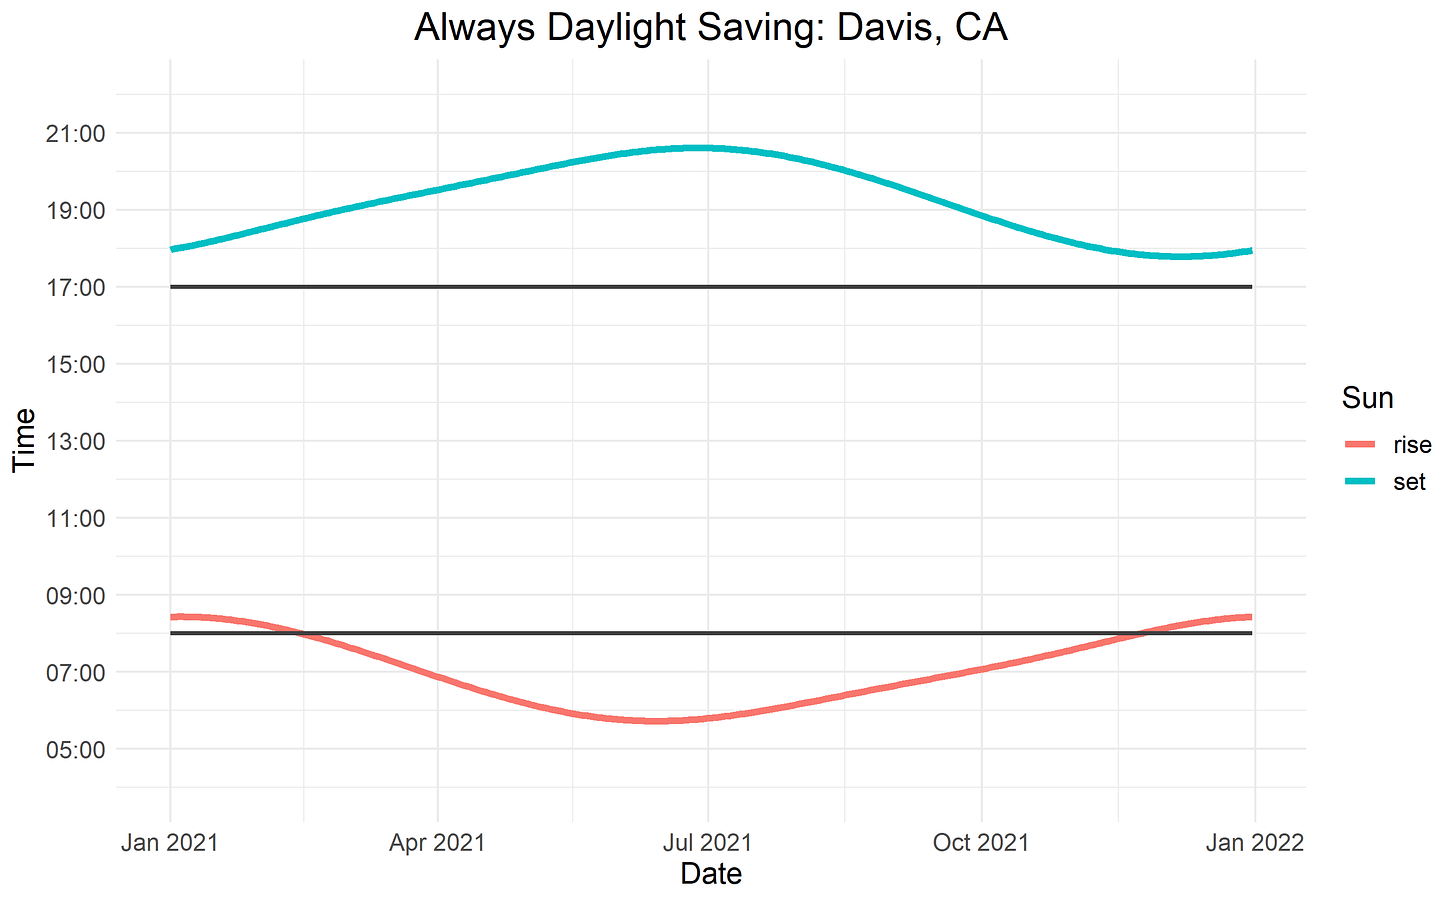 All Daylight Saving in Davis